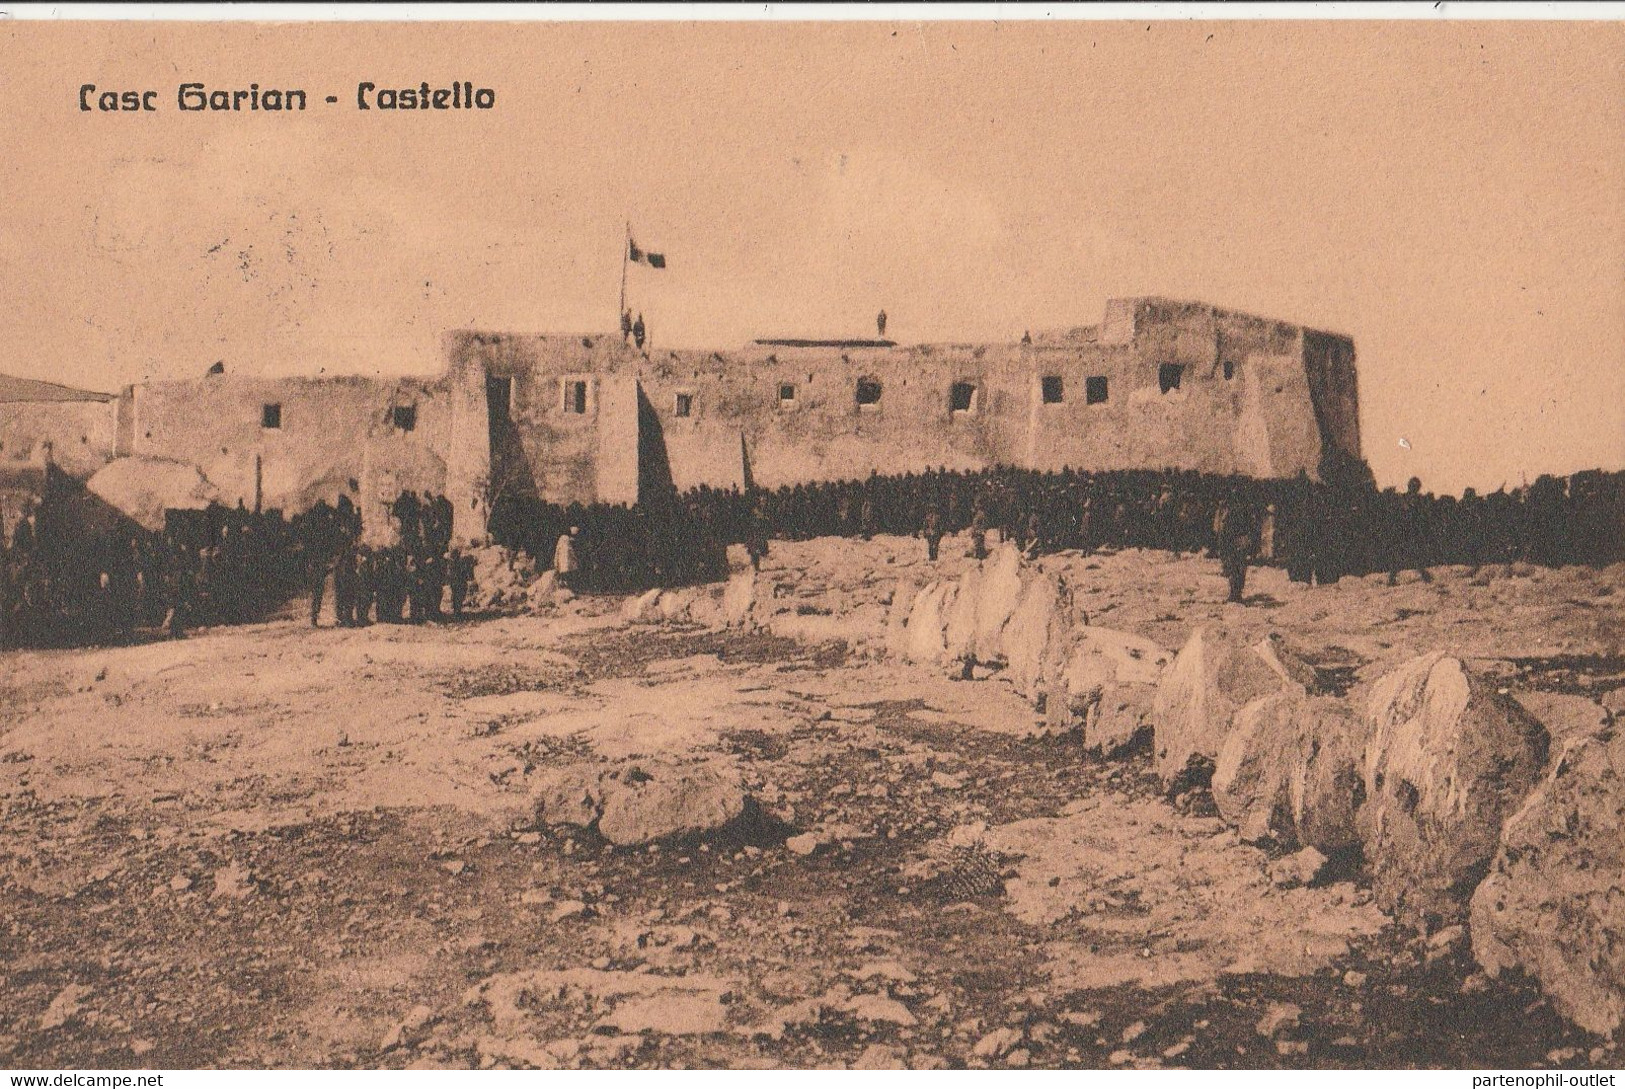 Cartolina - Postcard /   Viaggiata - Sent /  Casc Garian - Castello - Libia